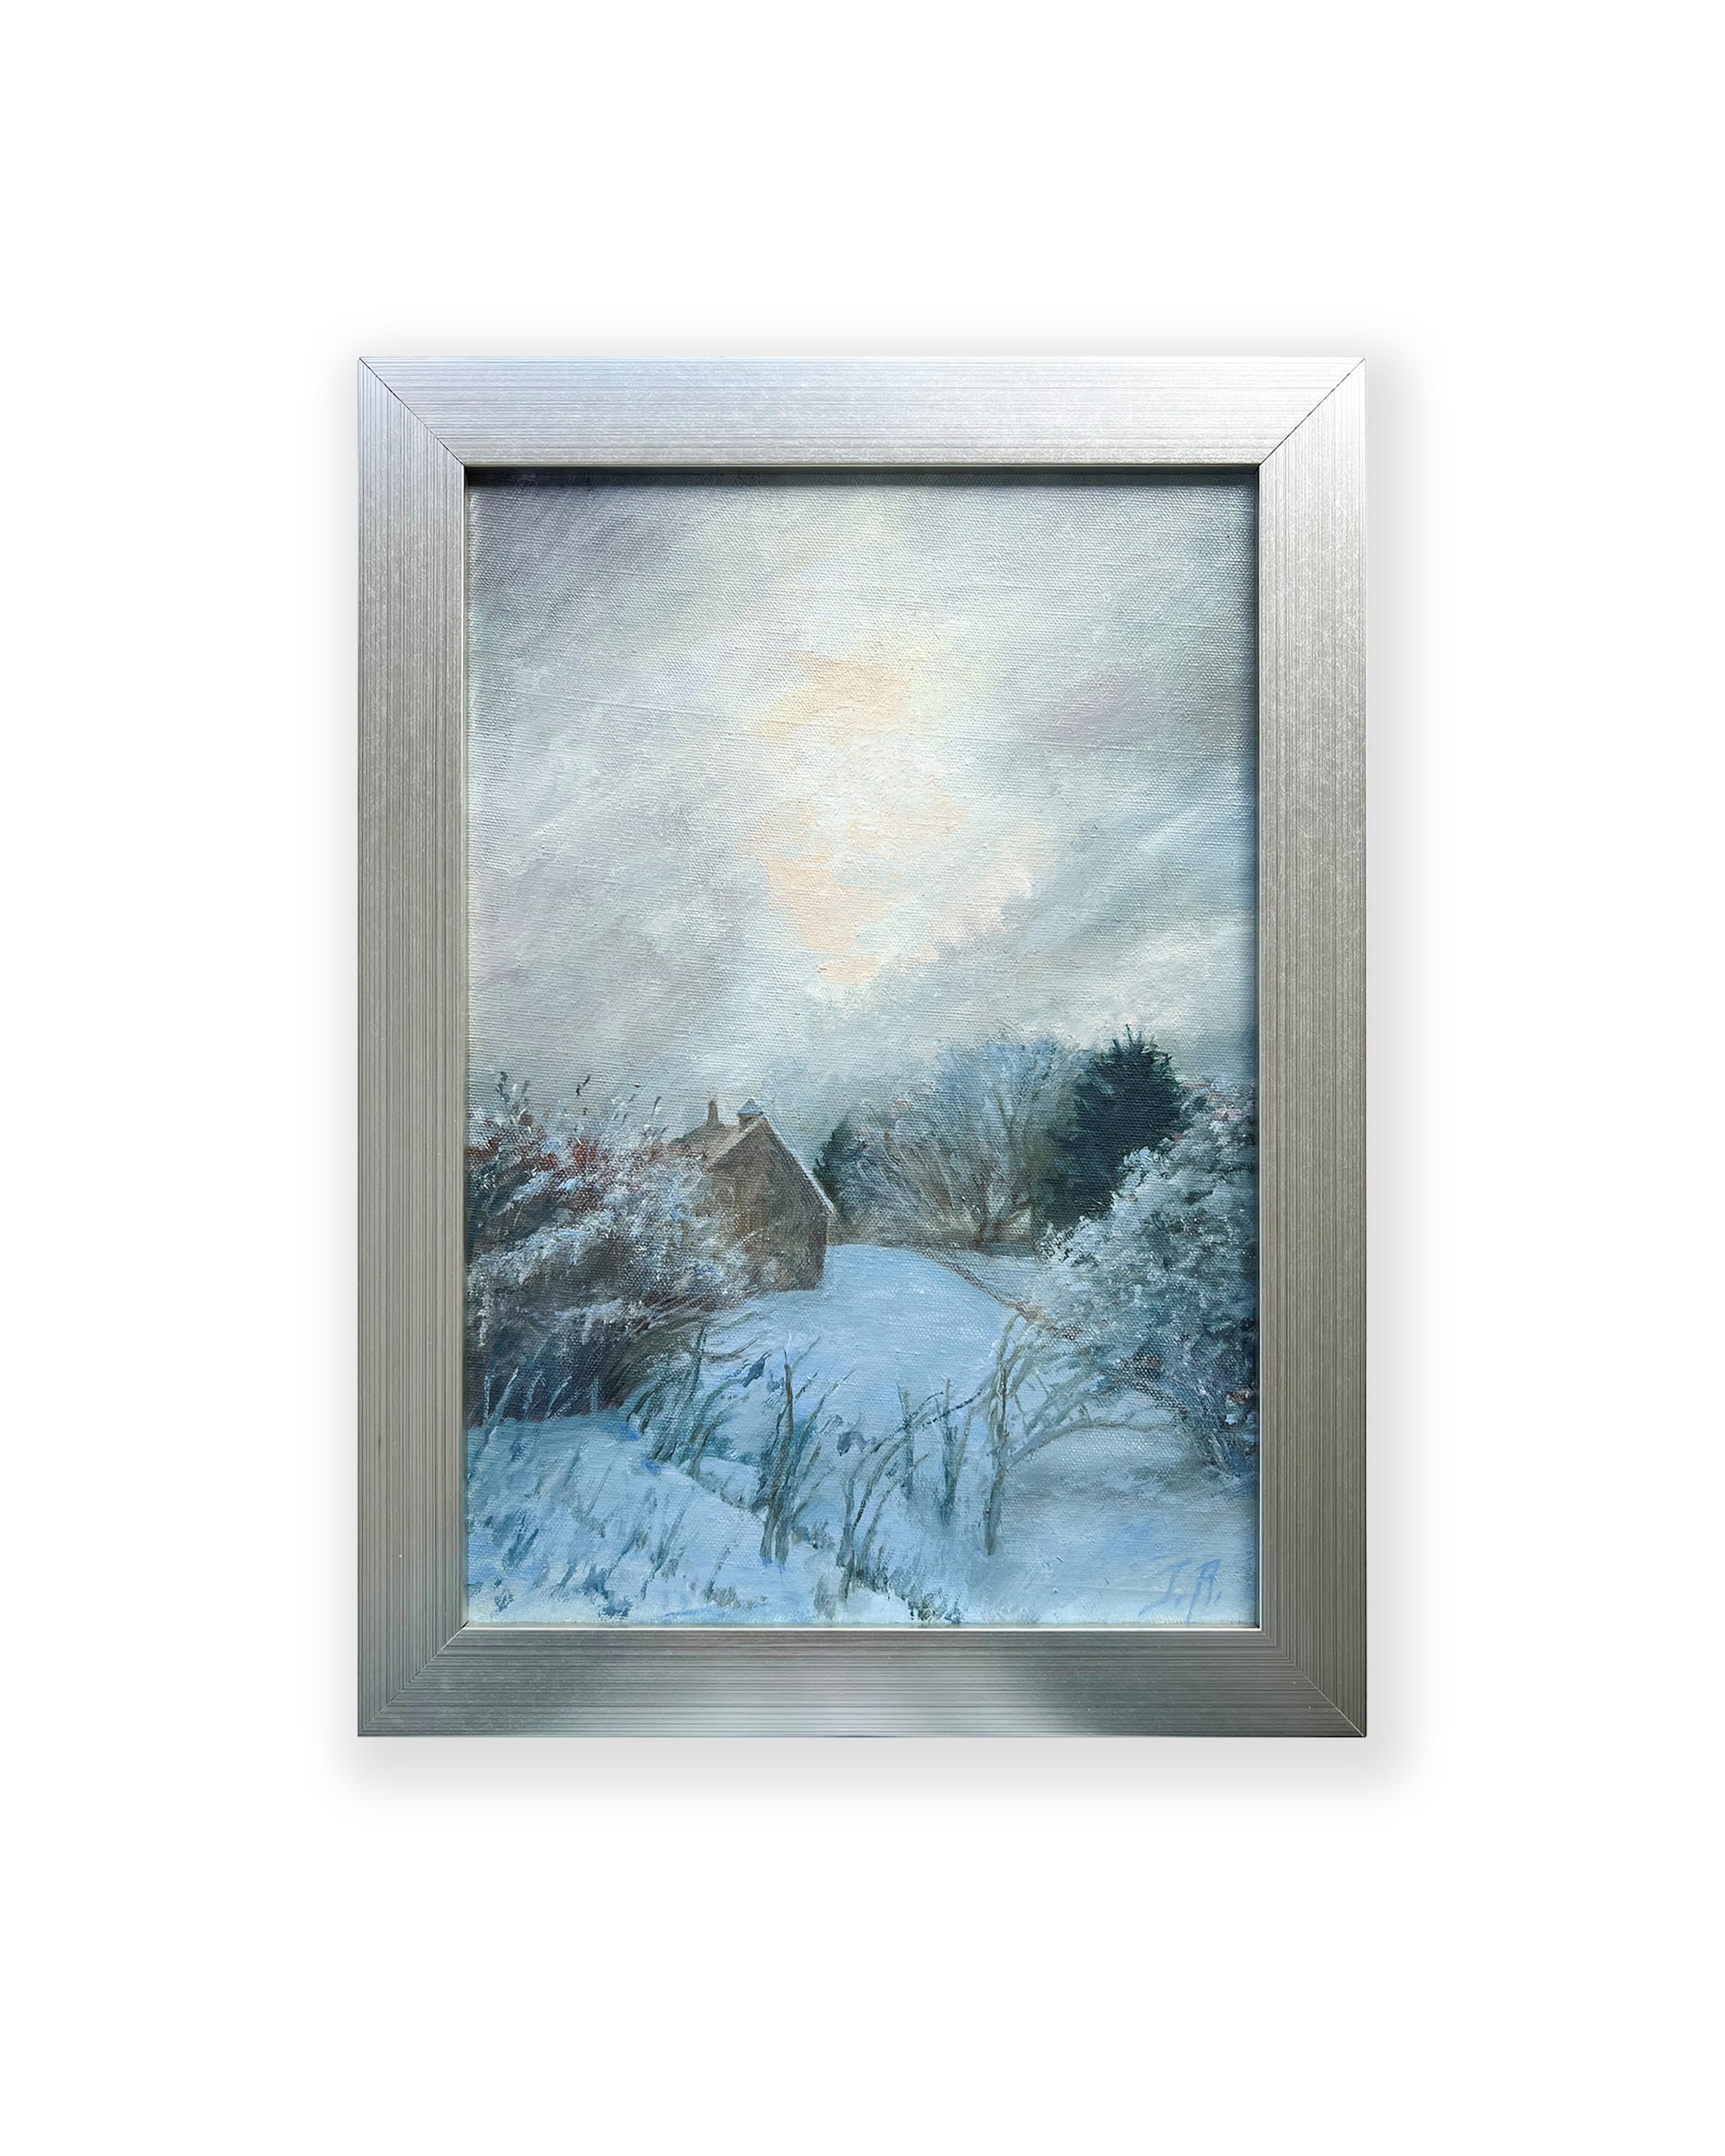 Judy Reynolds Figurative Painting - Maine Snowfall (Traditional Plein Air Landscape Painting, Winter Scene)